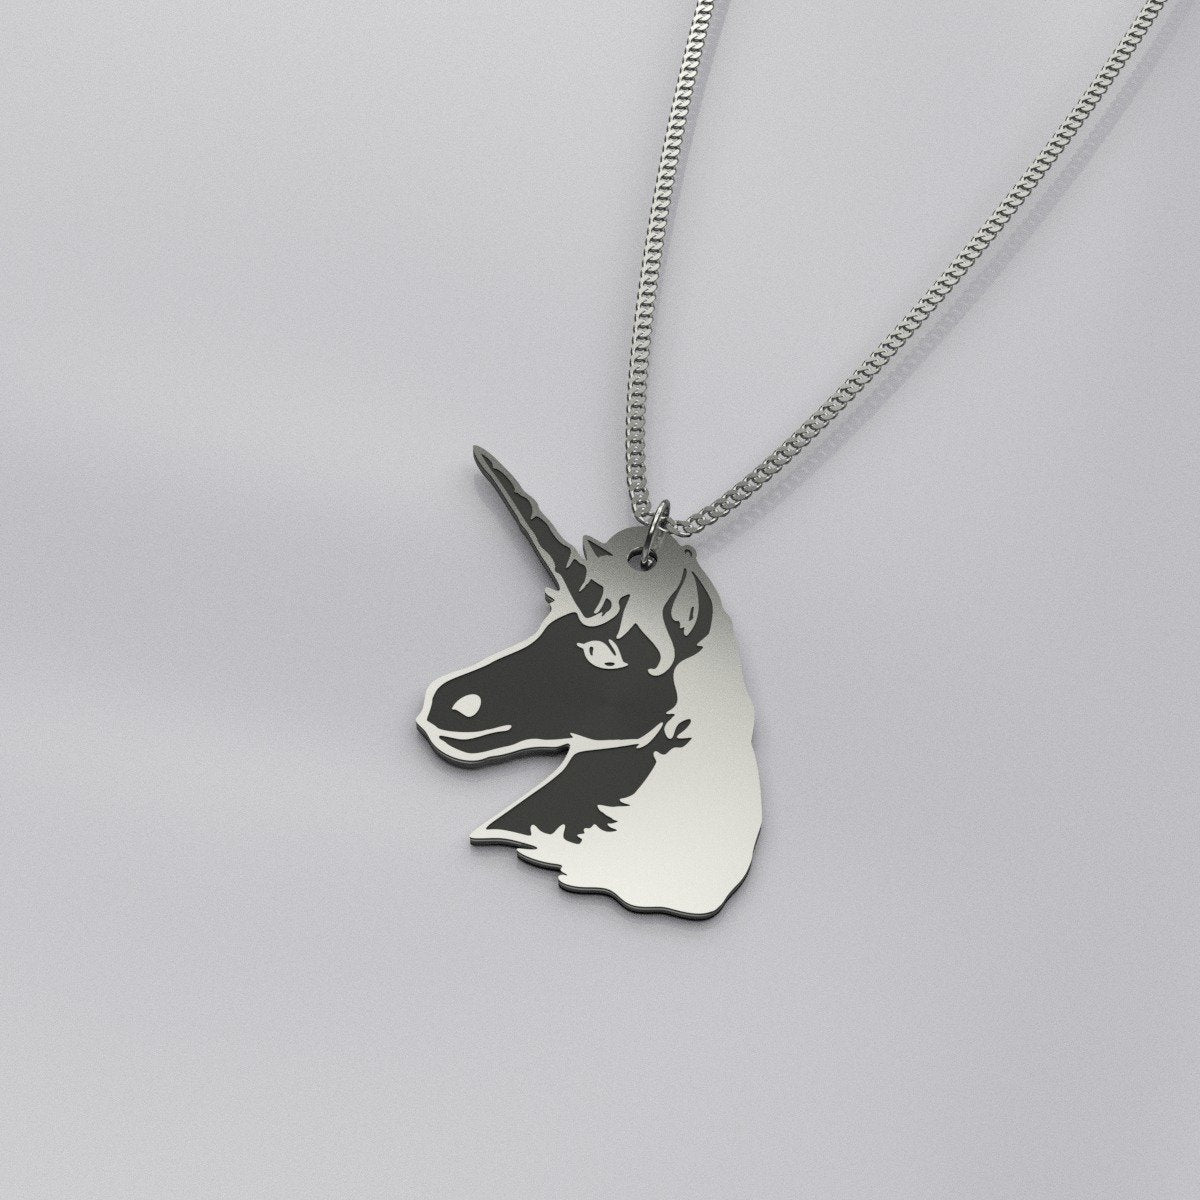 Unicorn Silver Pendant - Omtheo Gifts